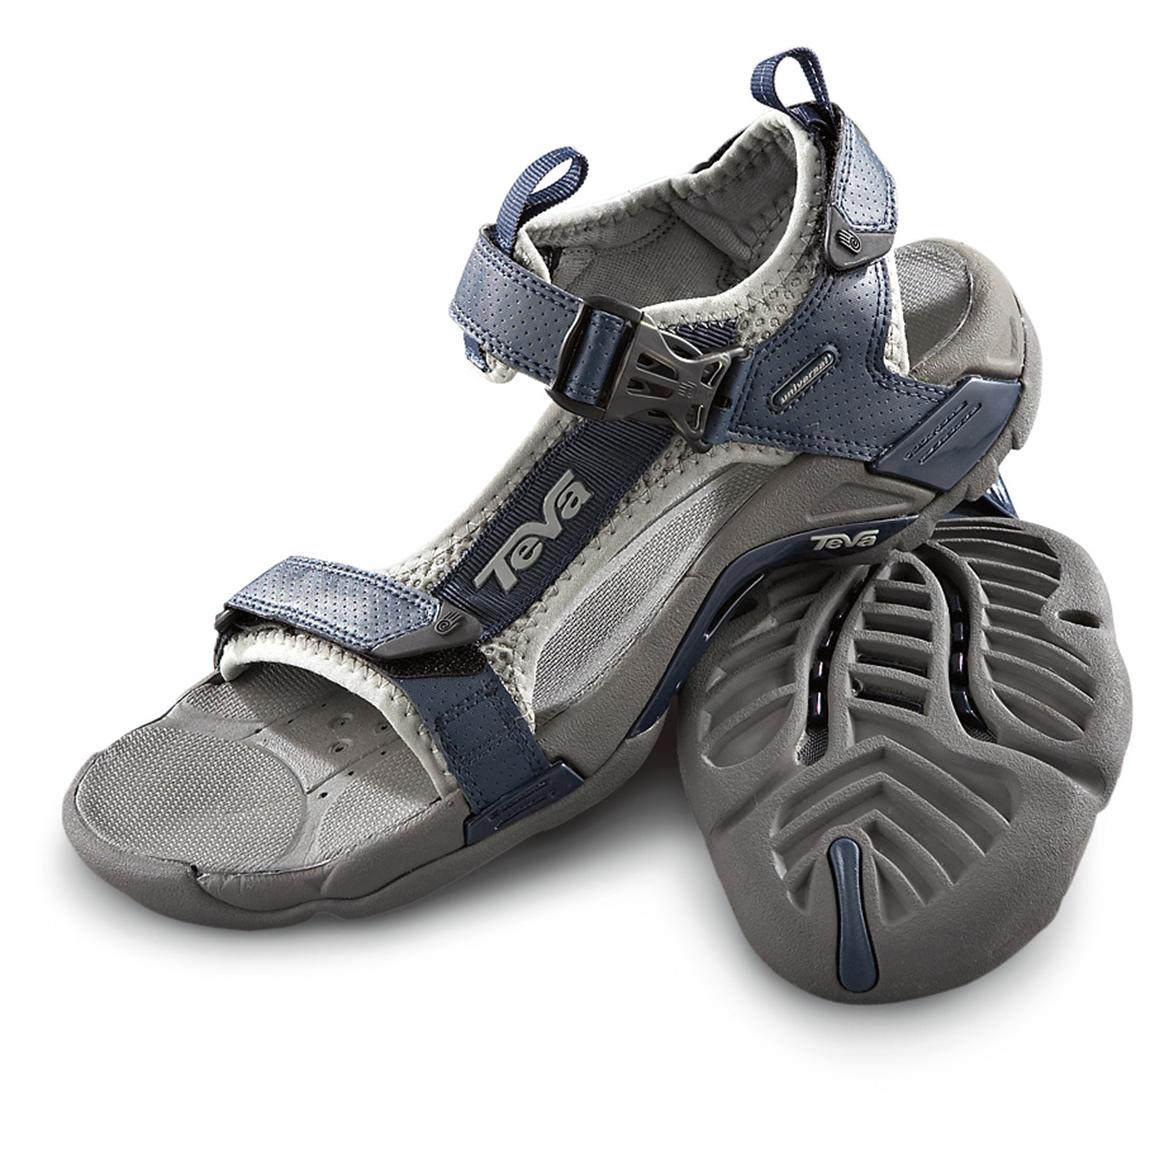  Men s  Teva   Open Toachi Sandals  Blue 155607 Sandals  